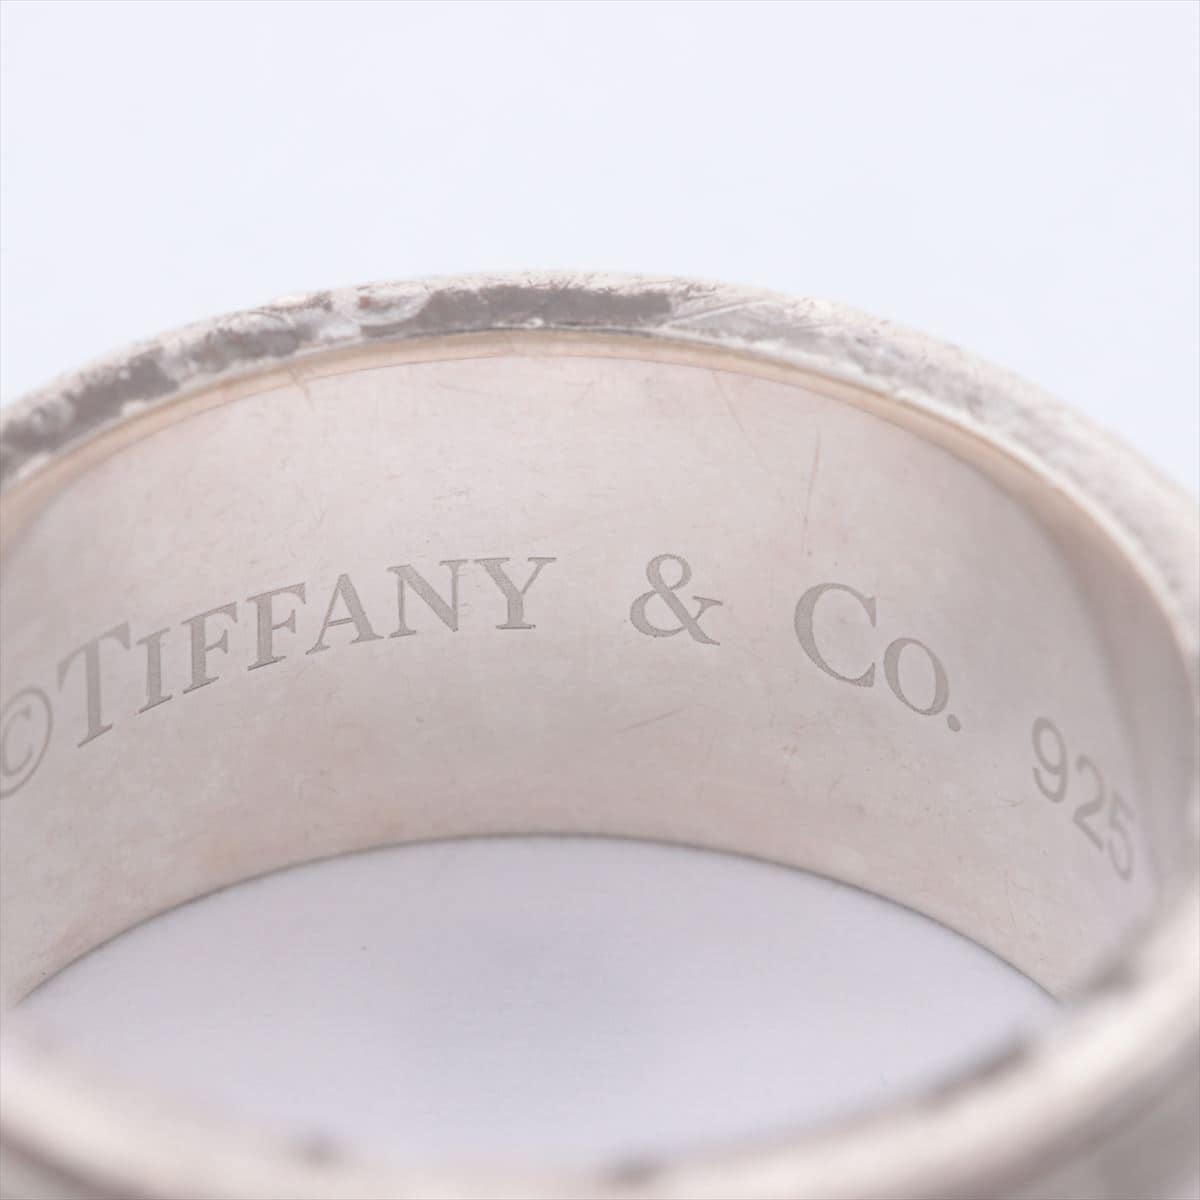 Tiffany Atlas rings 925 7.6g Silver